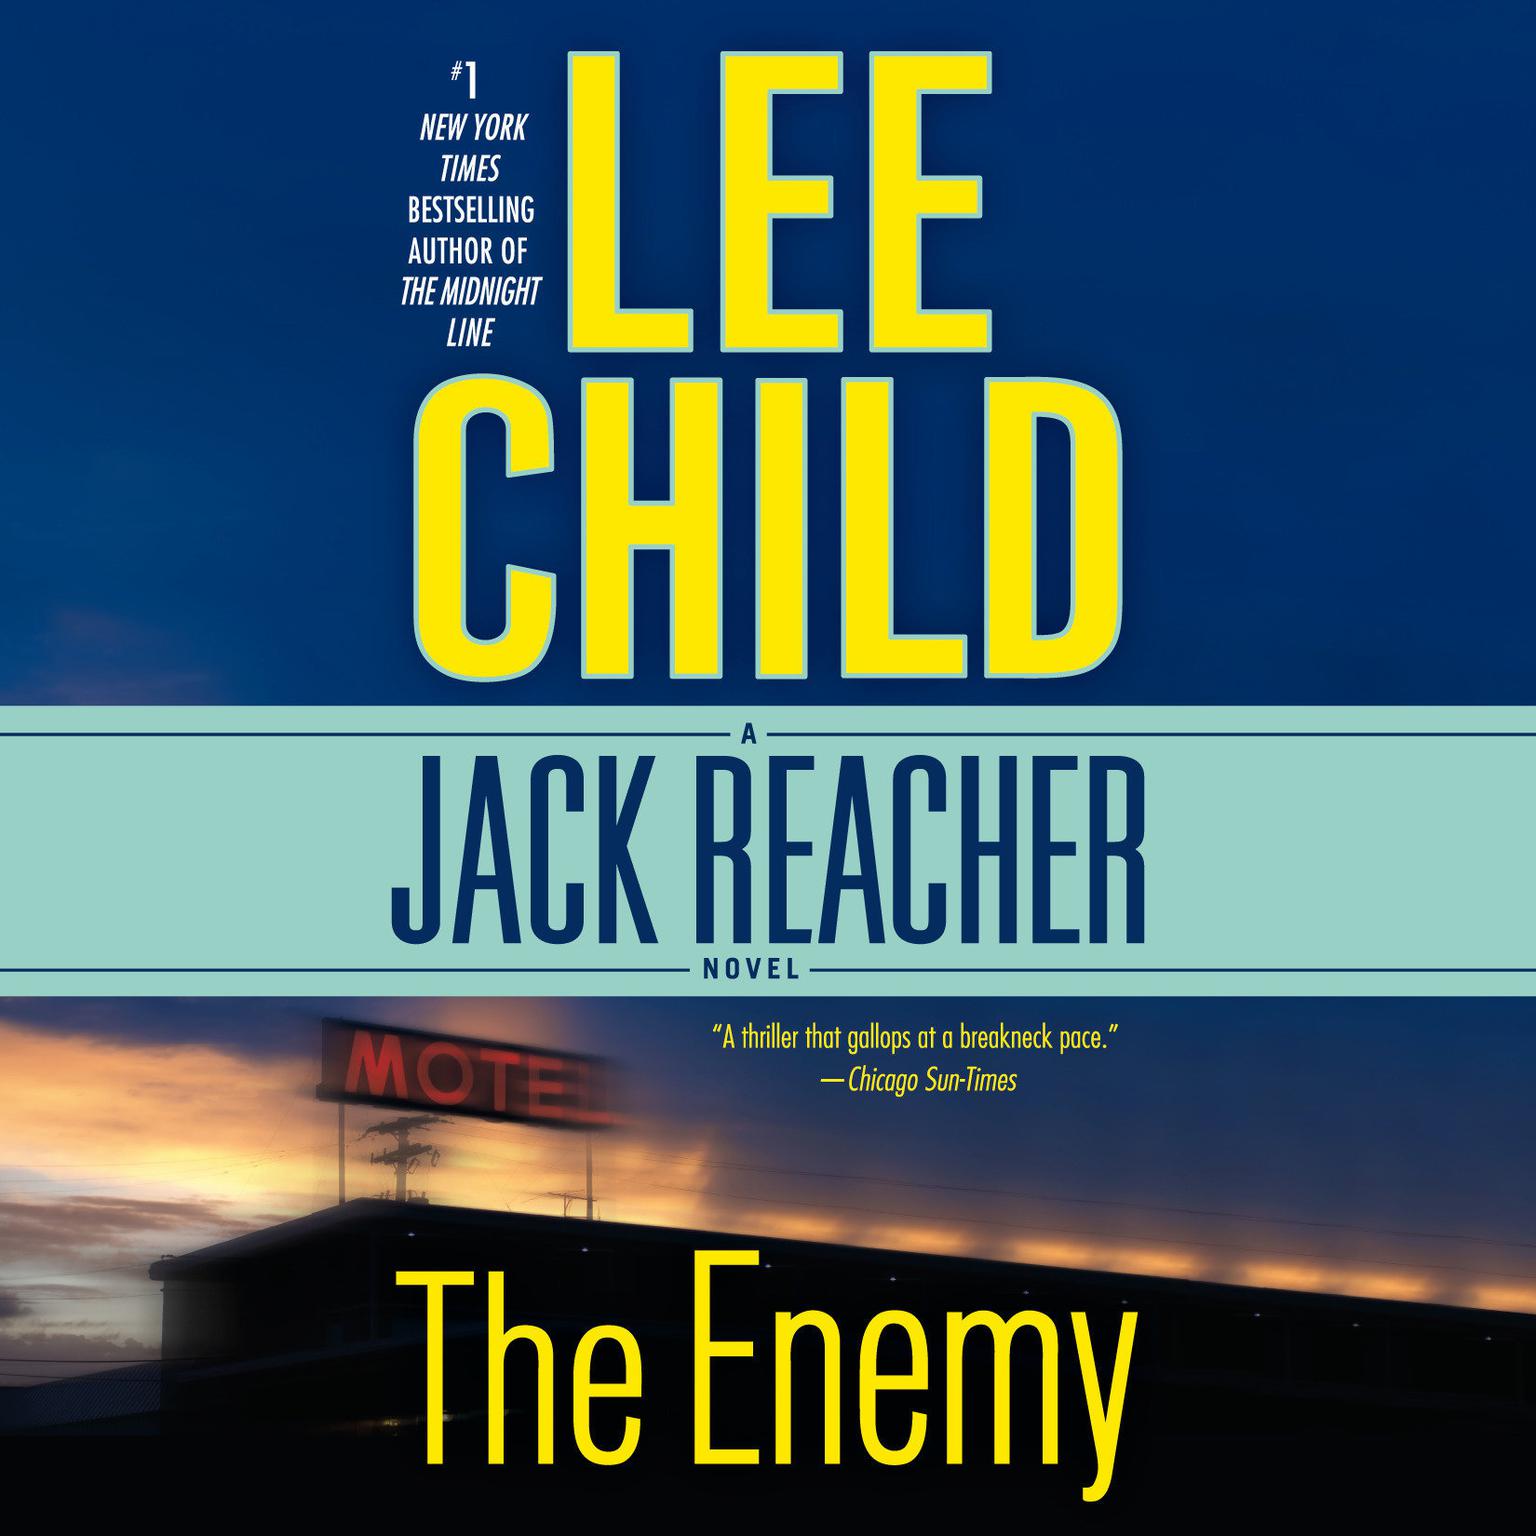 The Enemy: A Jack Reacher Novel Audiobook, by Lee Child